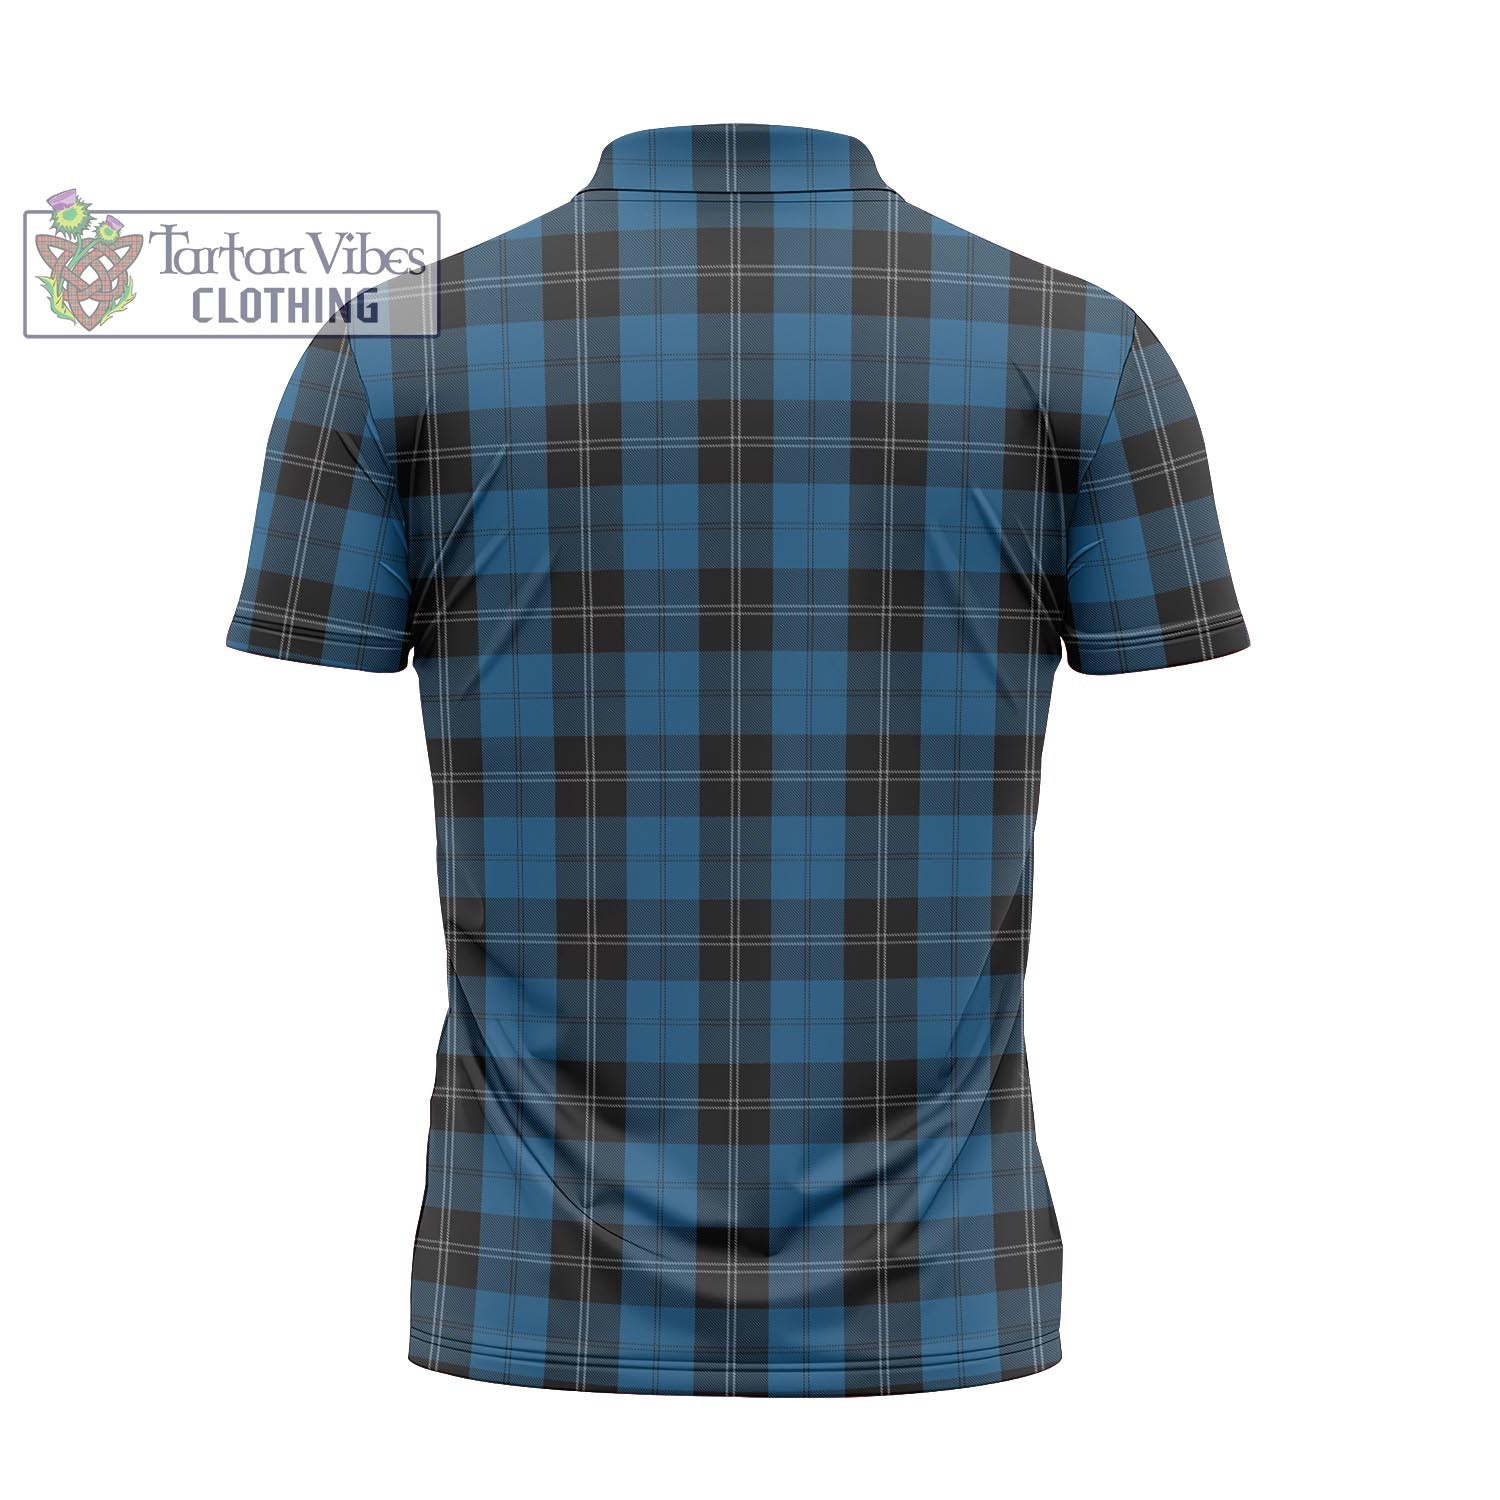 Tartan Vibes Clothing Ramsay Blue Hunting Tartan Zipper Polo Shirt with Family Crest